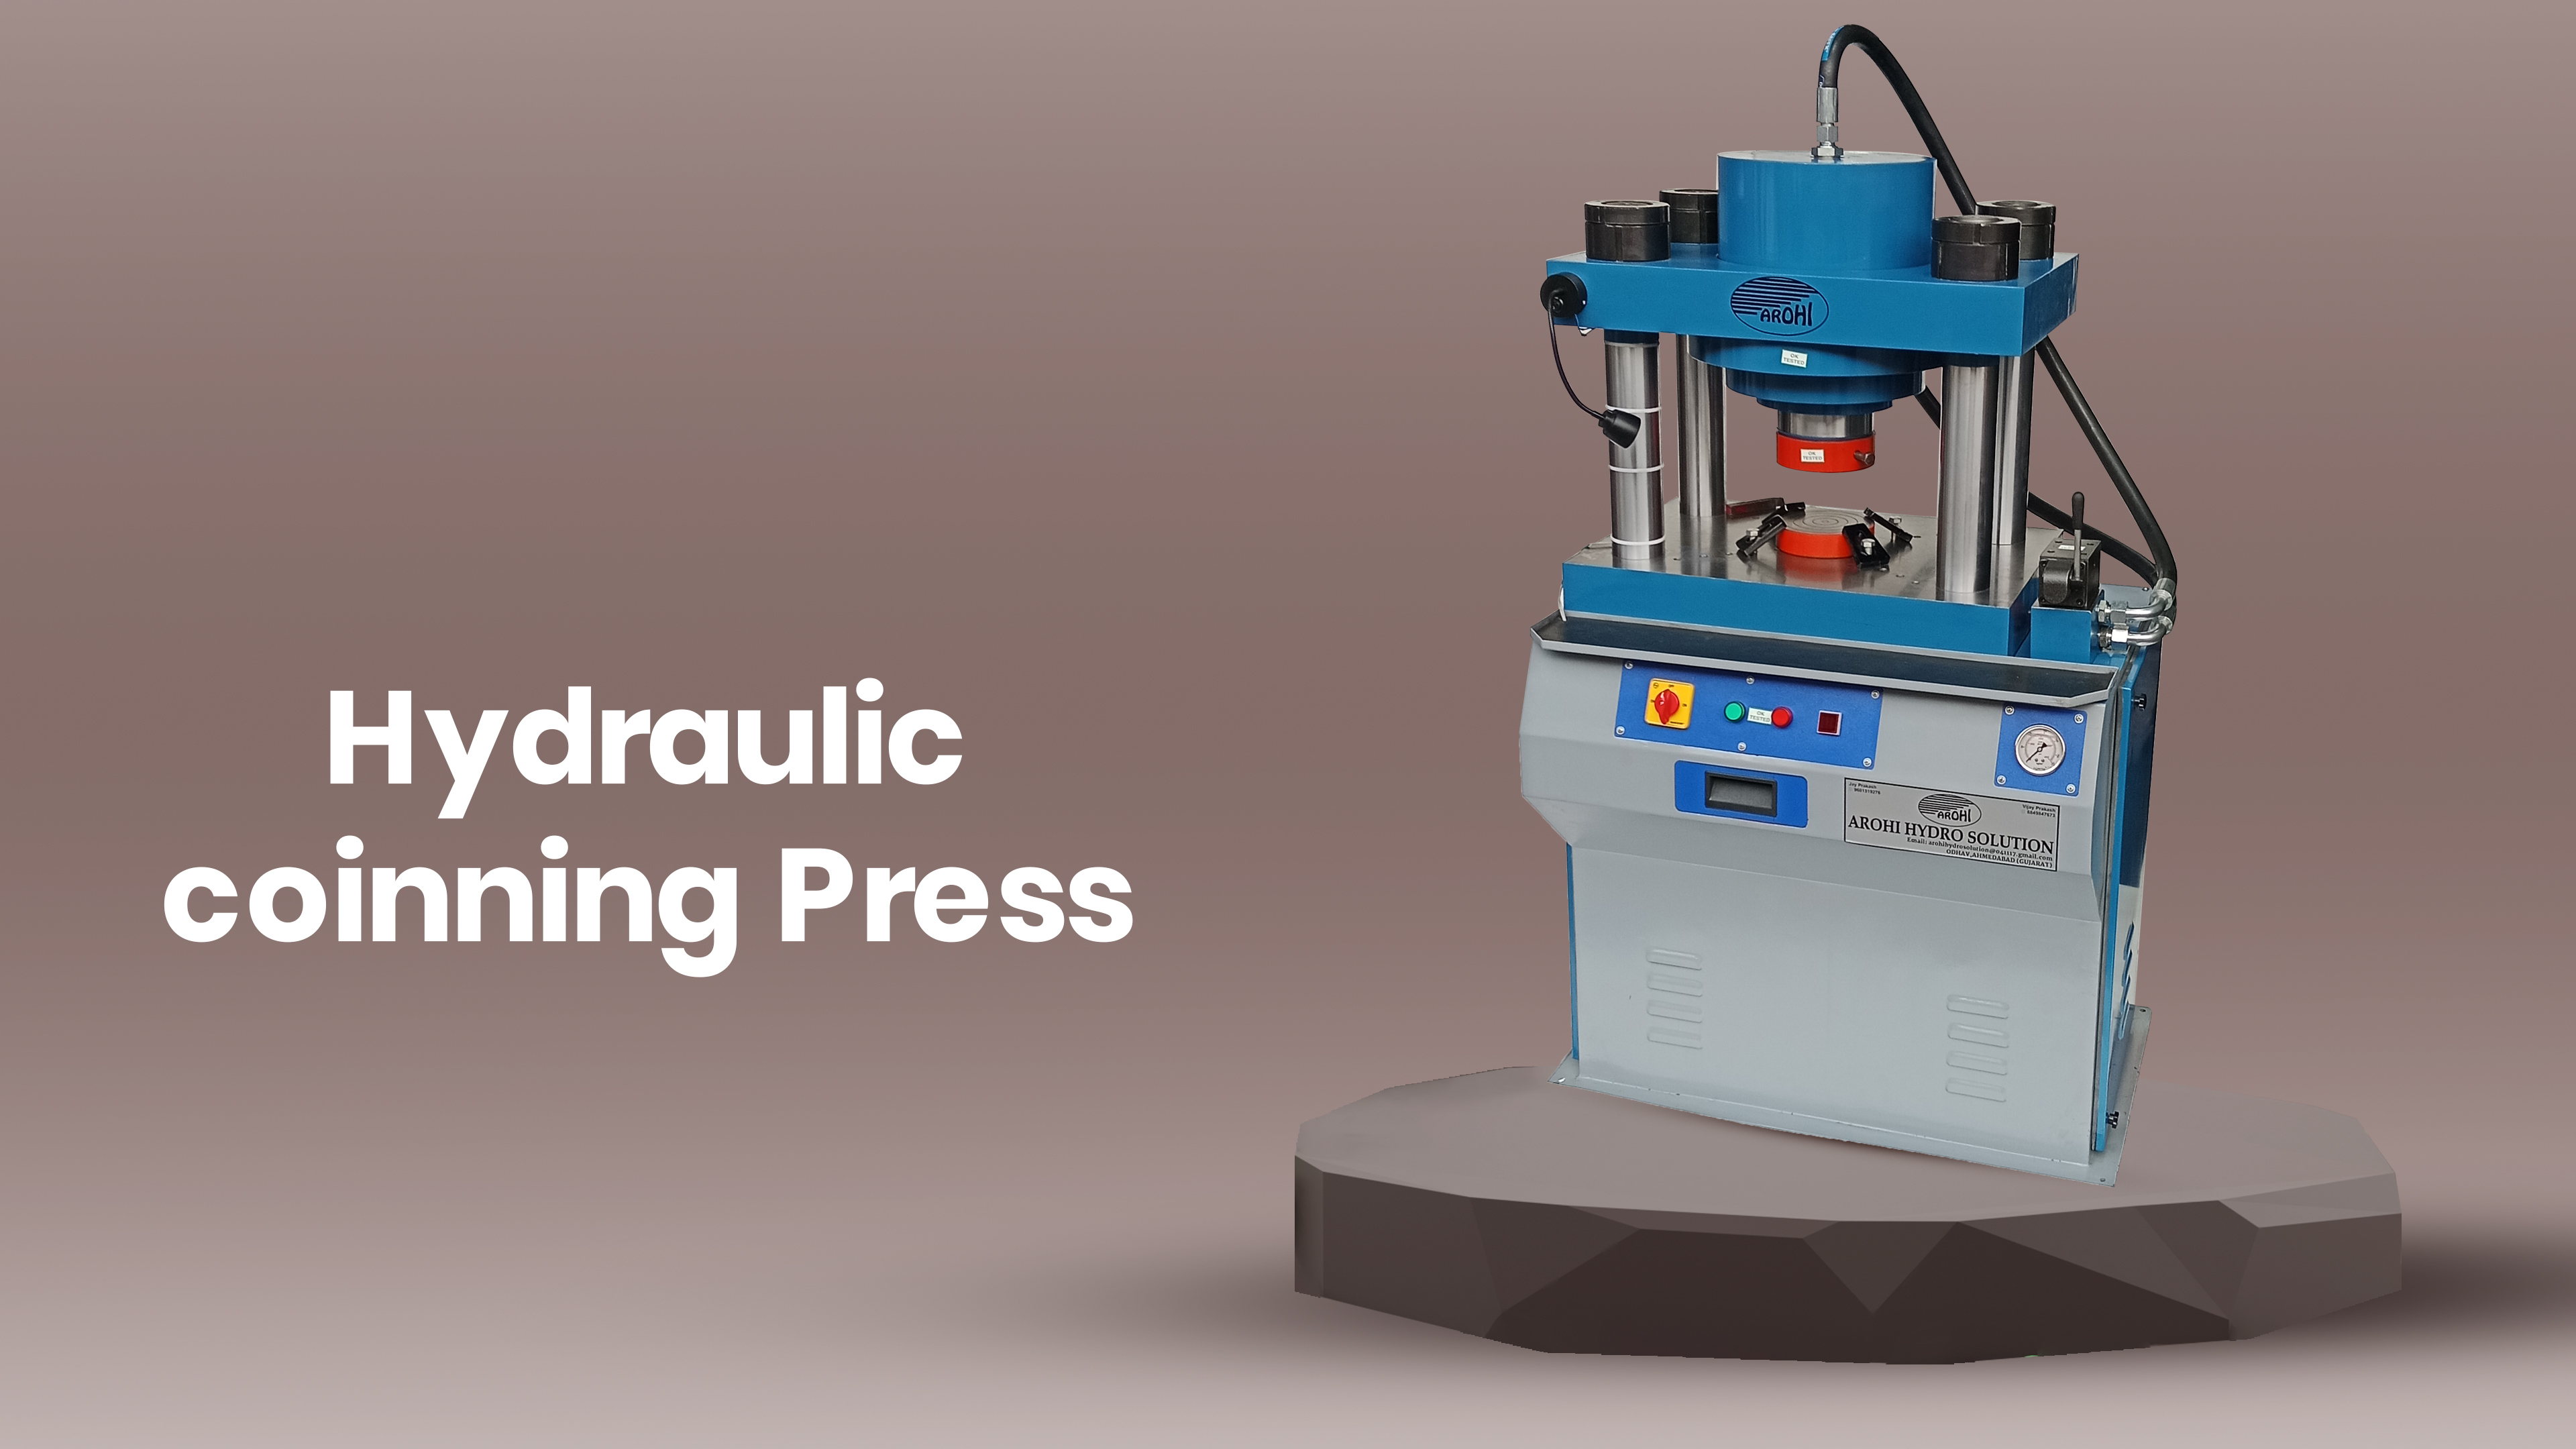 Hydraulic coinning Press